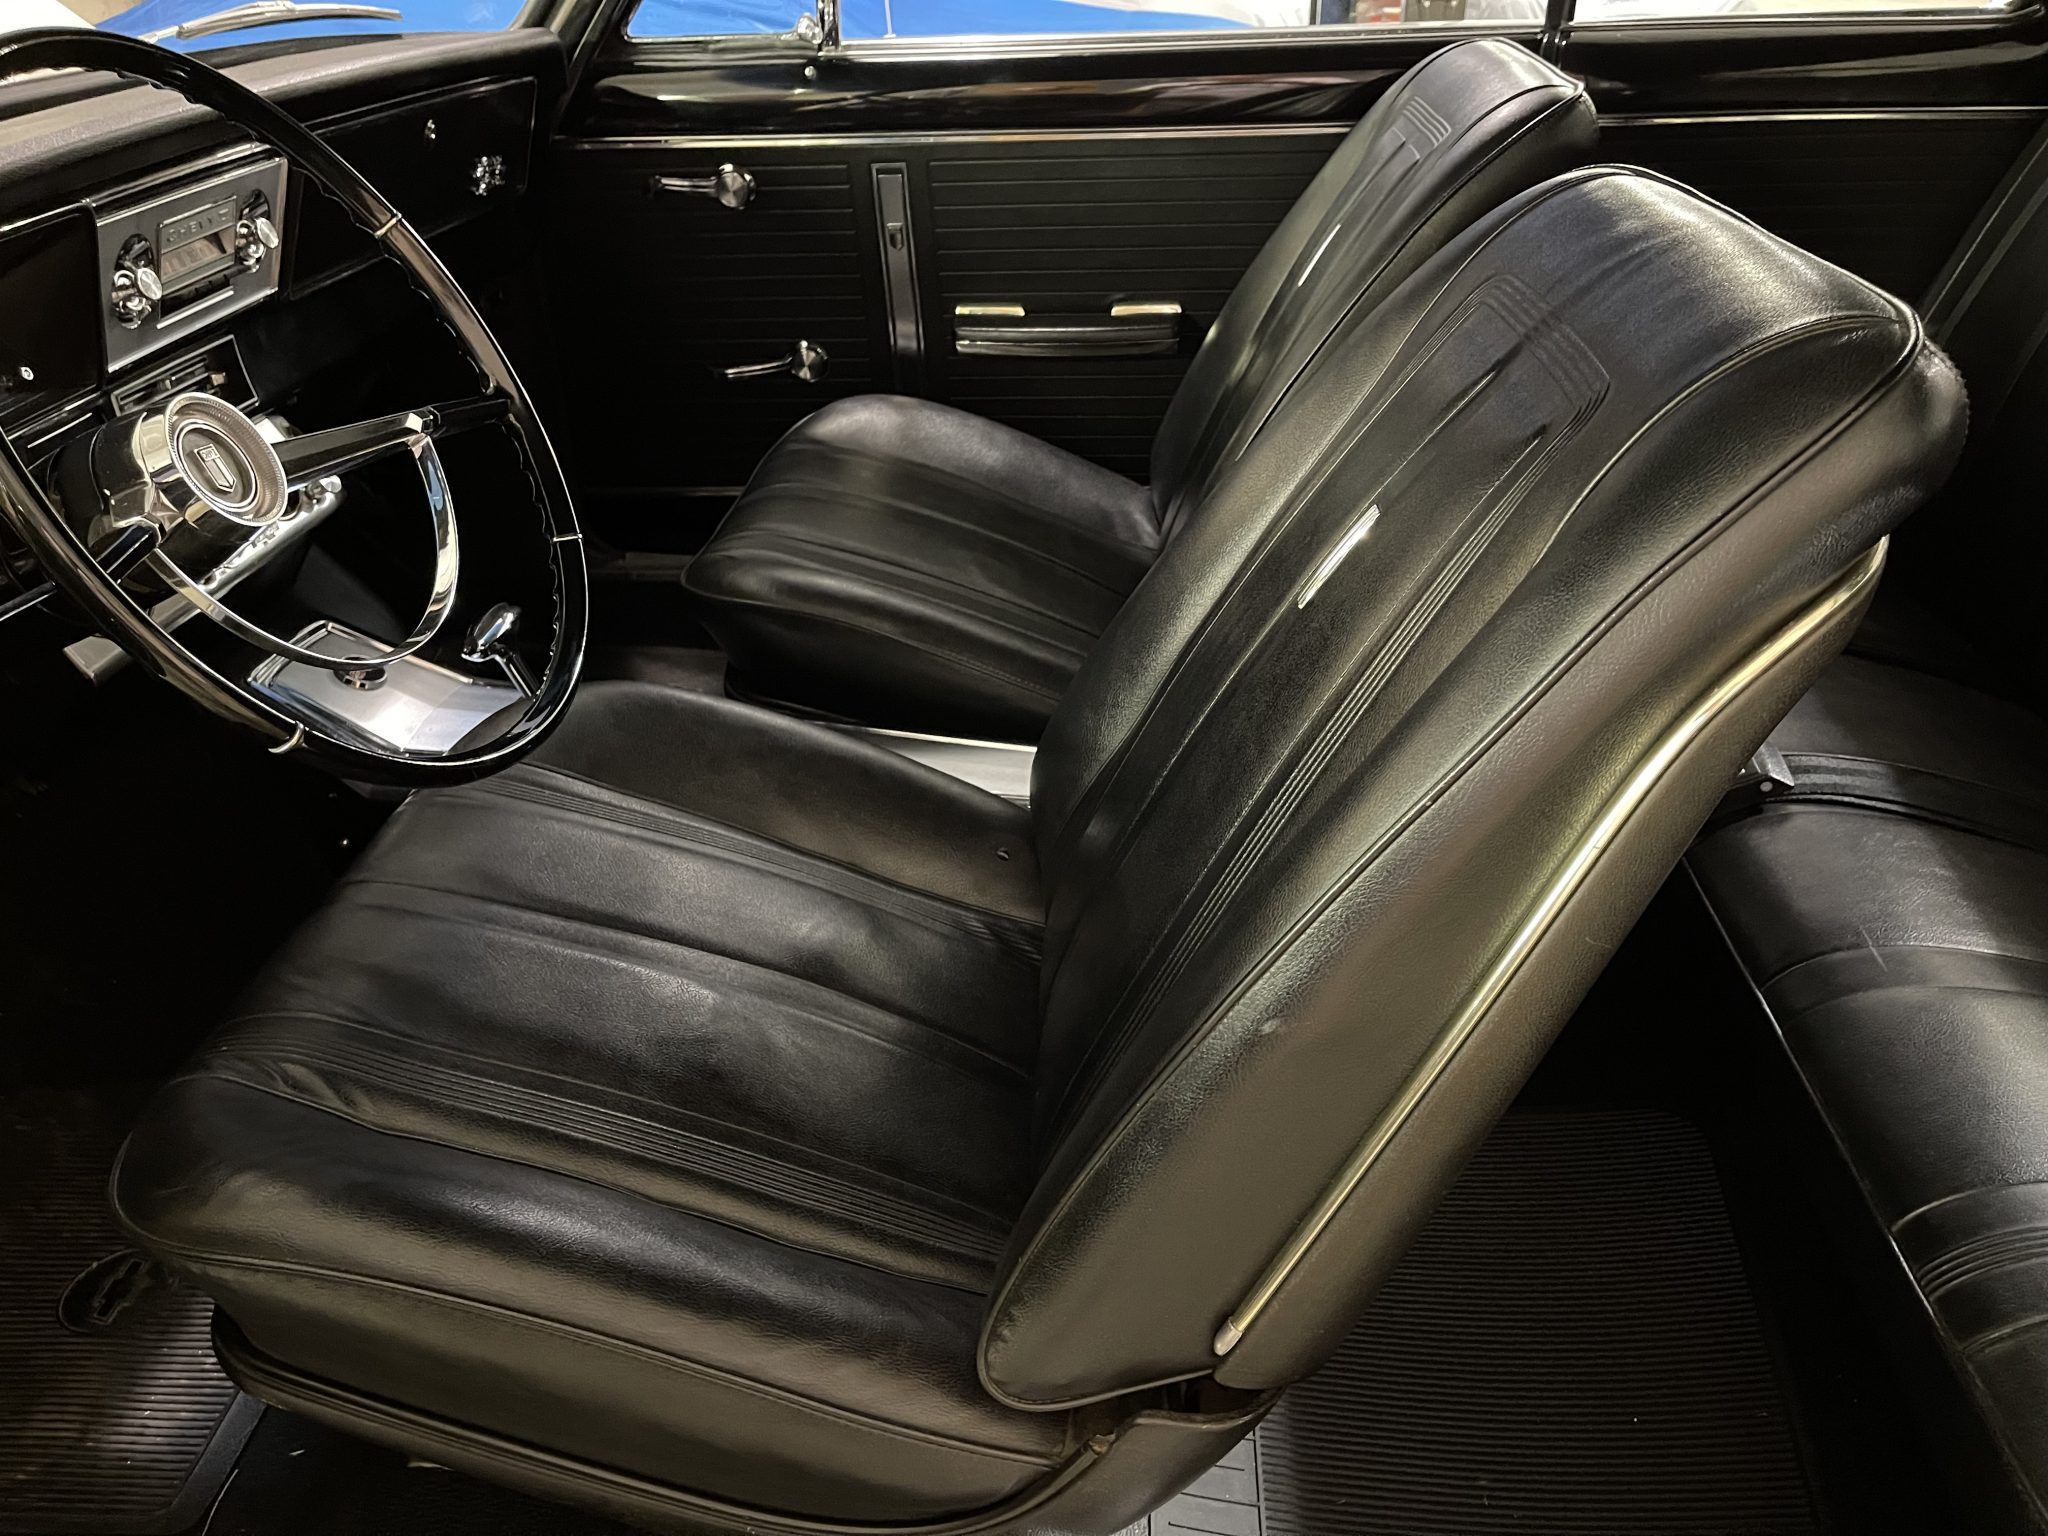 1966-1967 Chevrolet Nova (Second Generation) interior